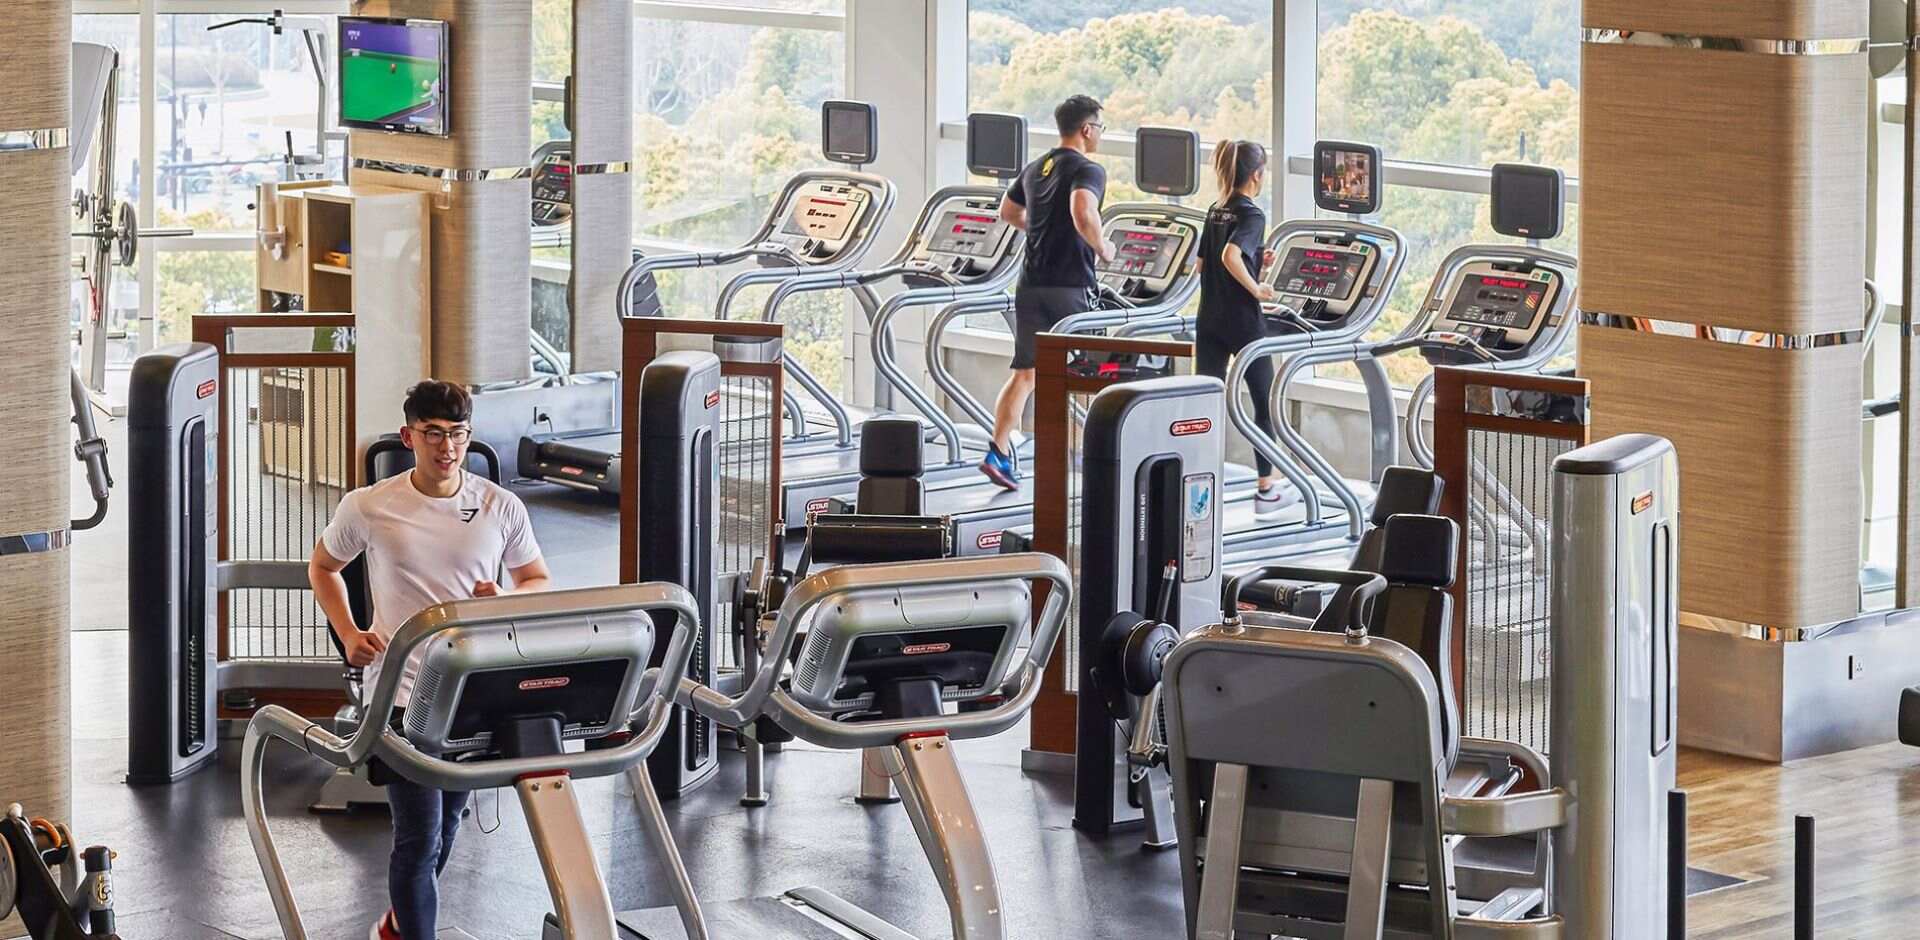 Fitness Center, Gym, Health Club In 上海｜浦東 ケリーホテル 上海